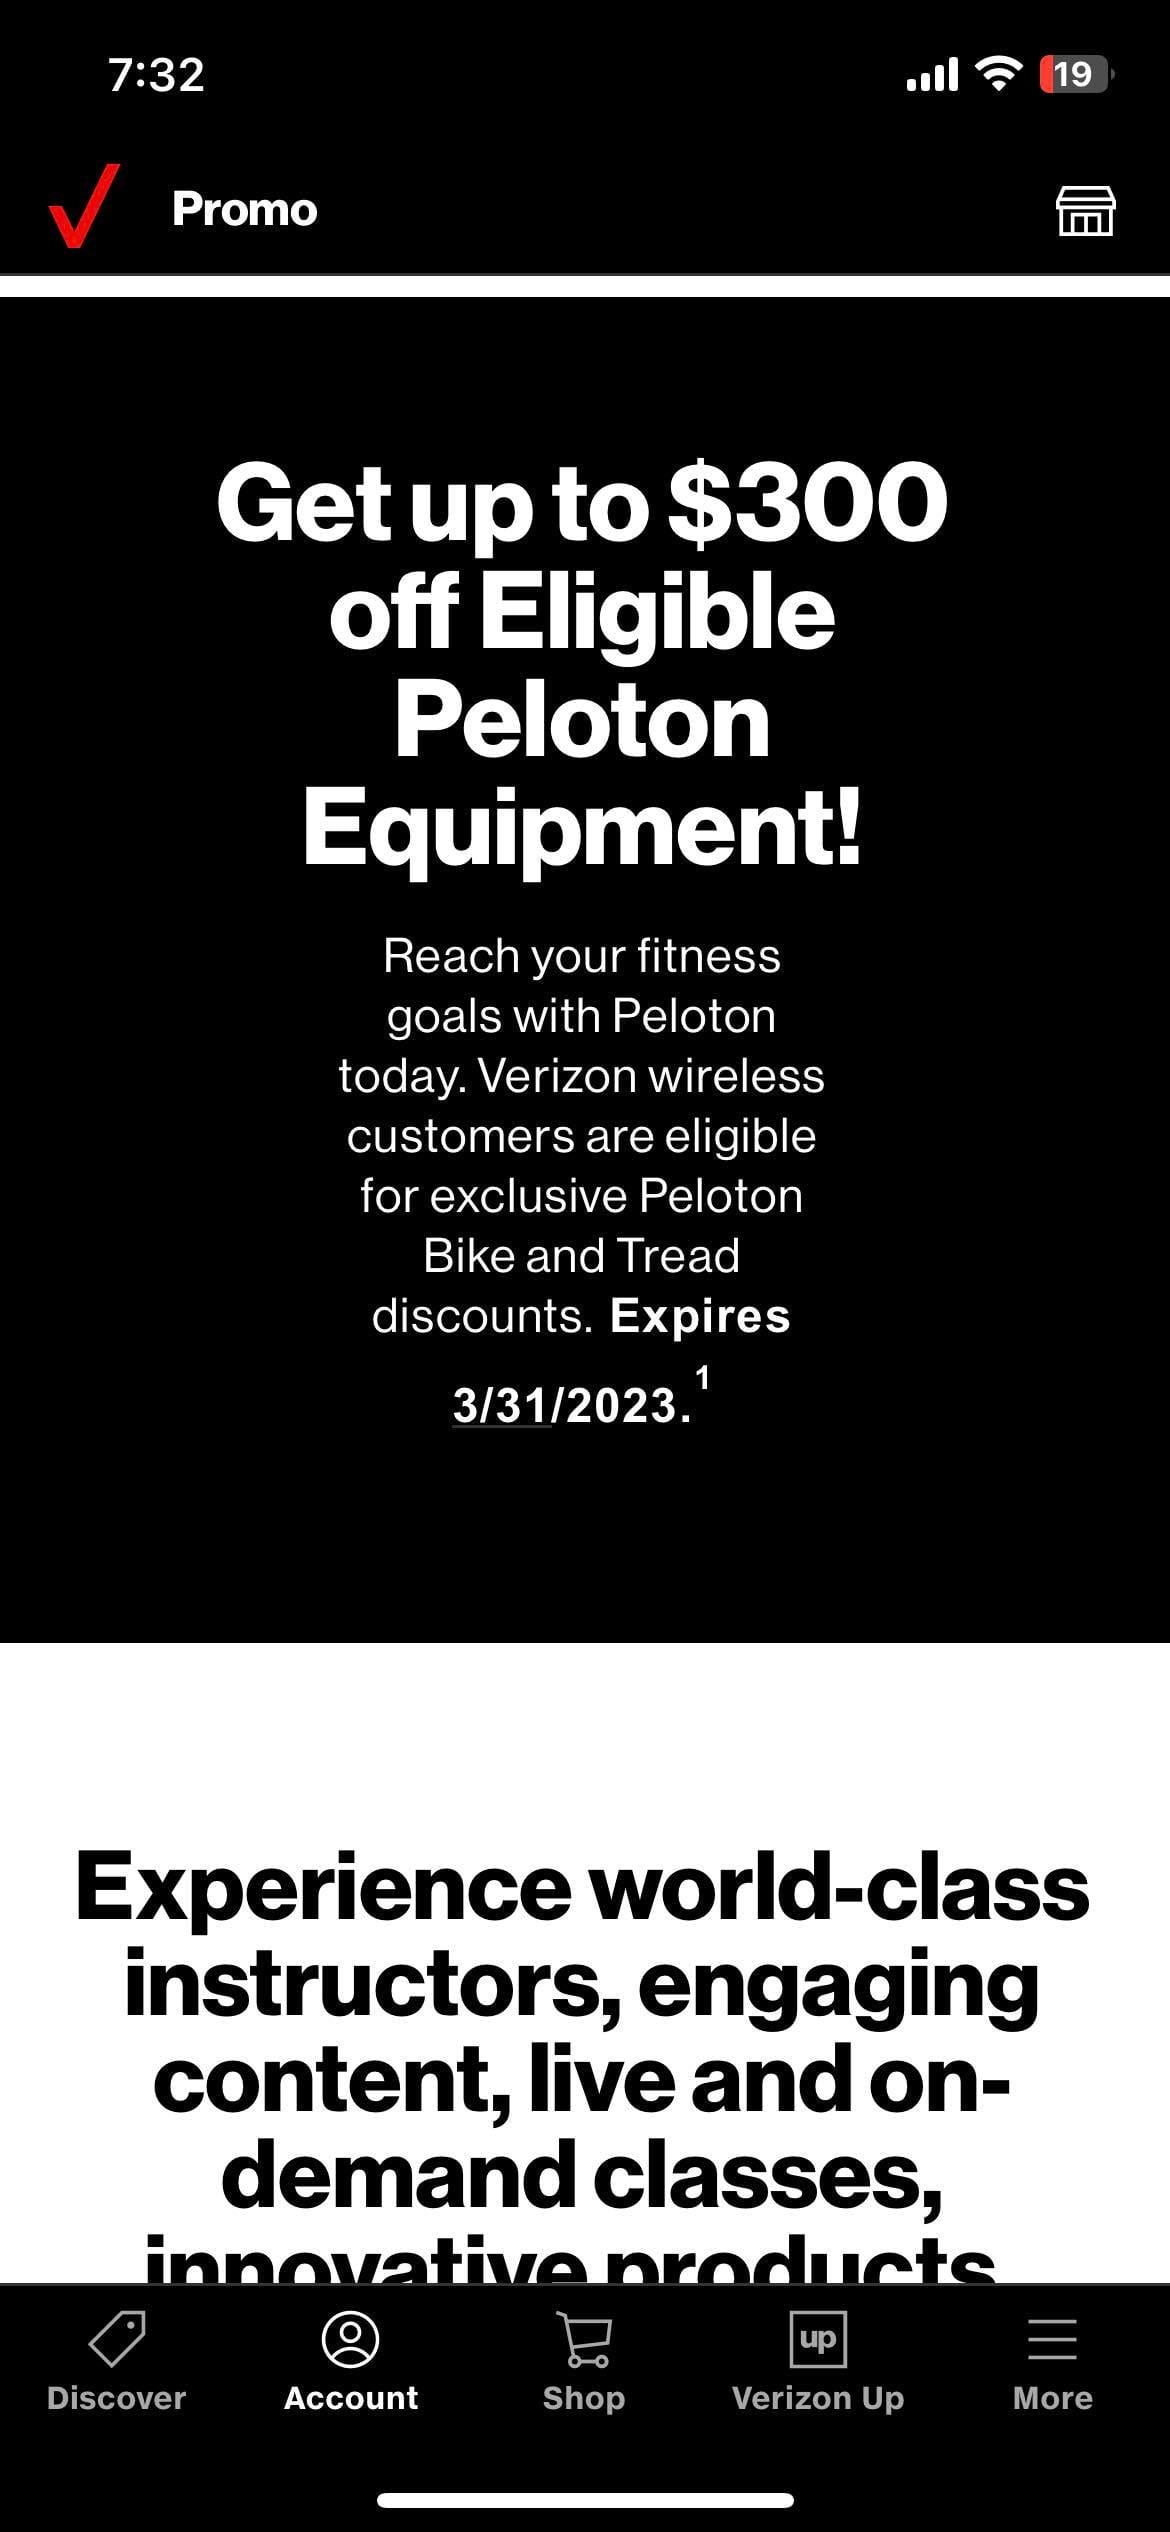 Verizon promos page displaying Peloton offer.